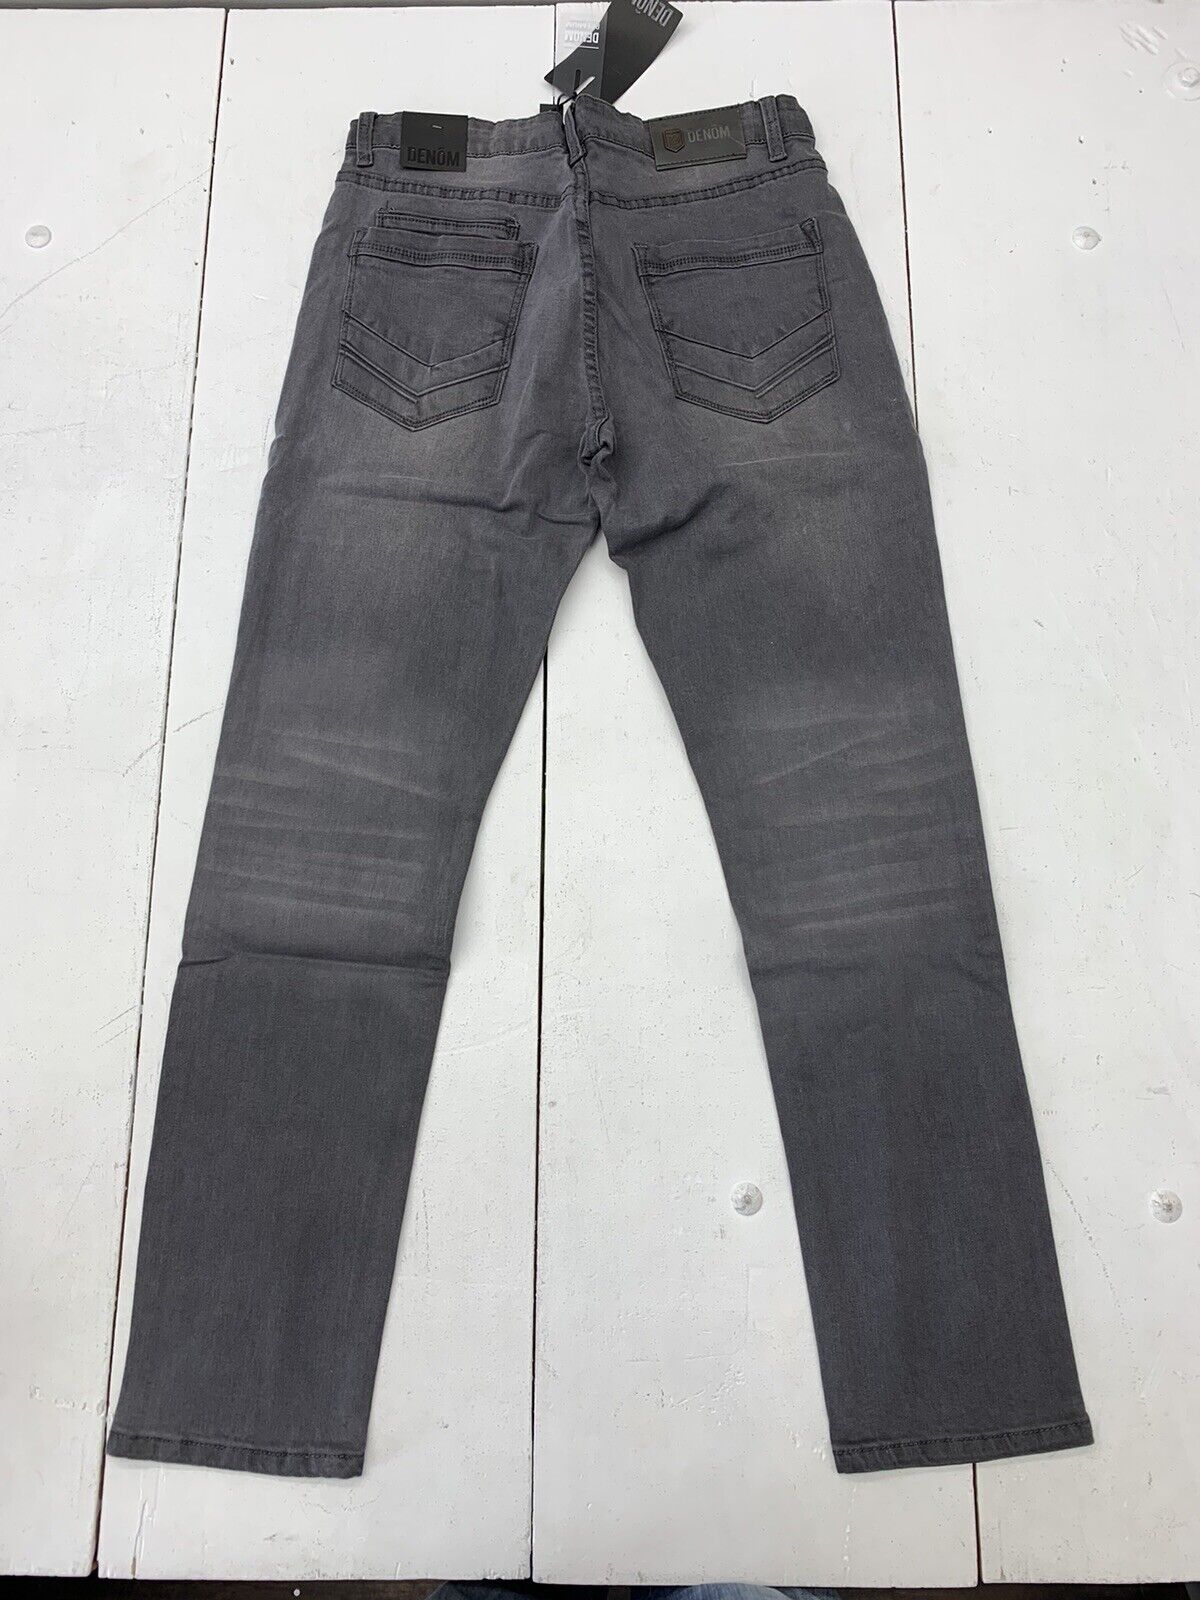 Denom exchange 32/30 Grey - Jeans Size Stretch beyond Mens